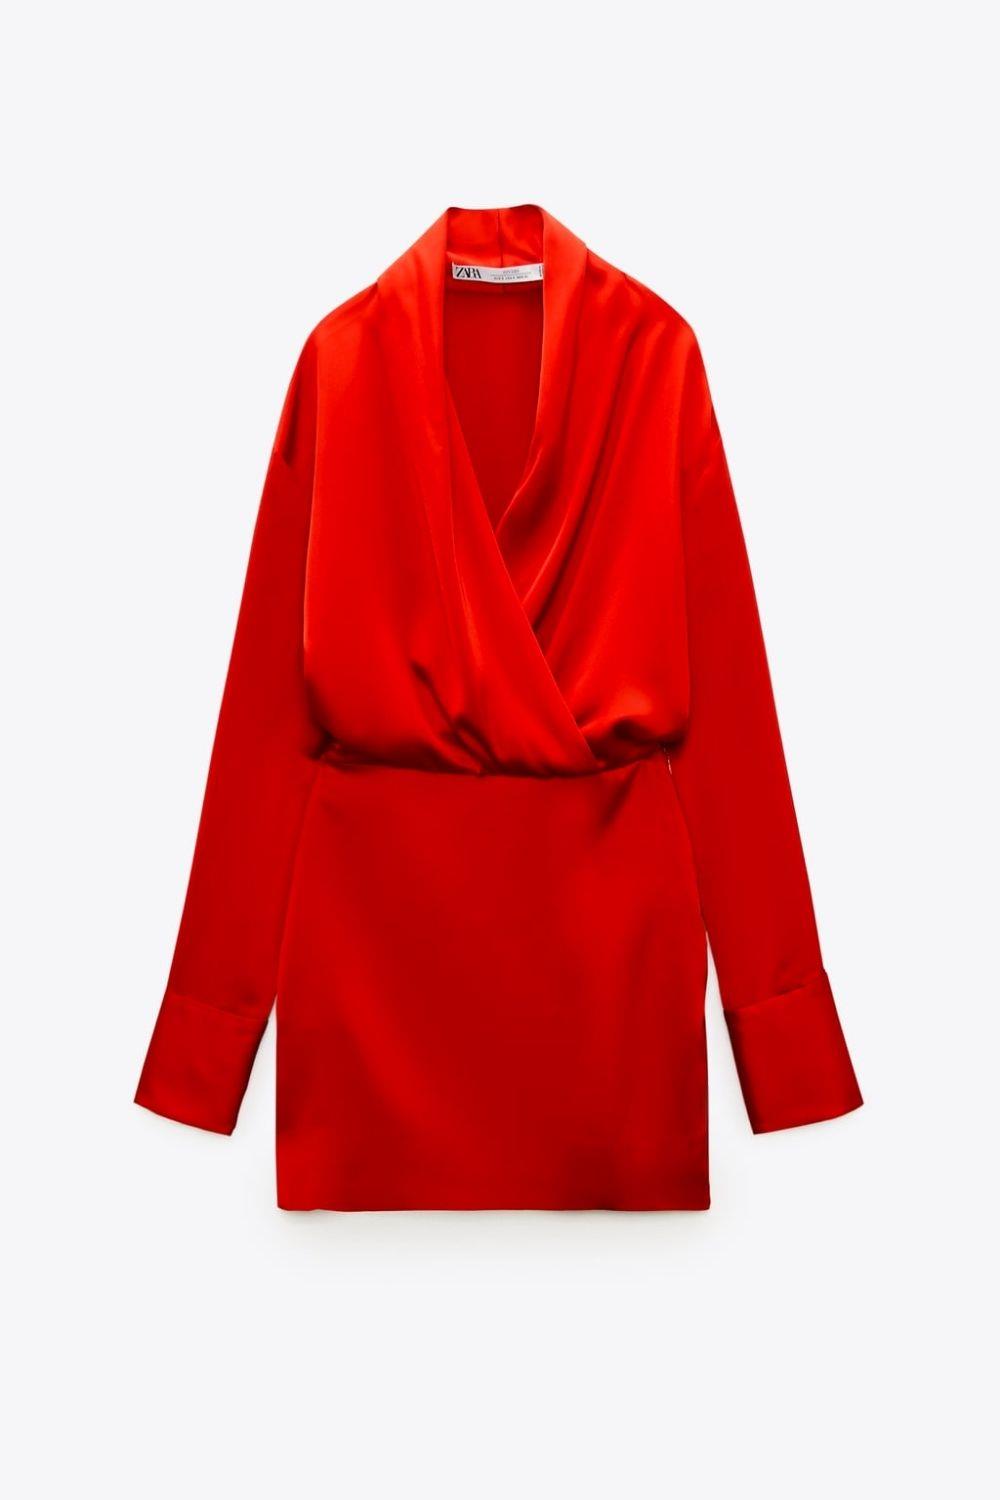 Vestido rojo de Zara